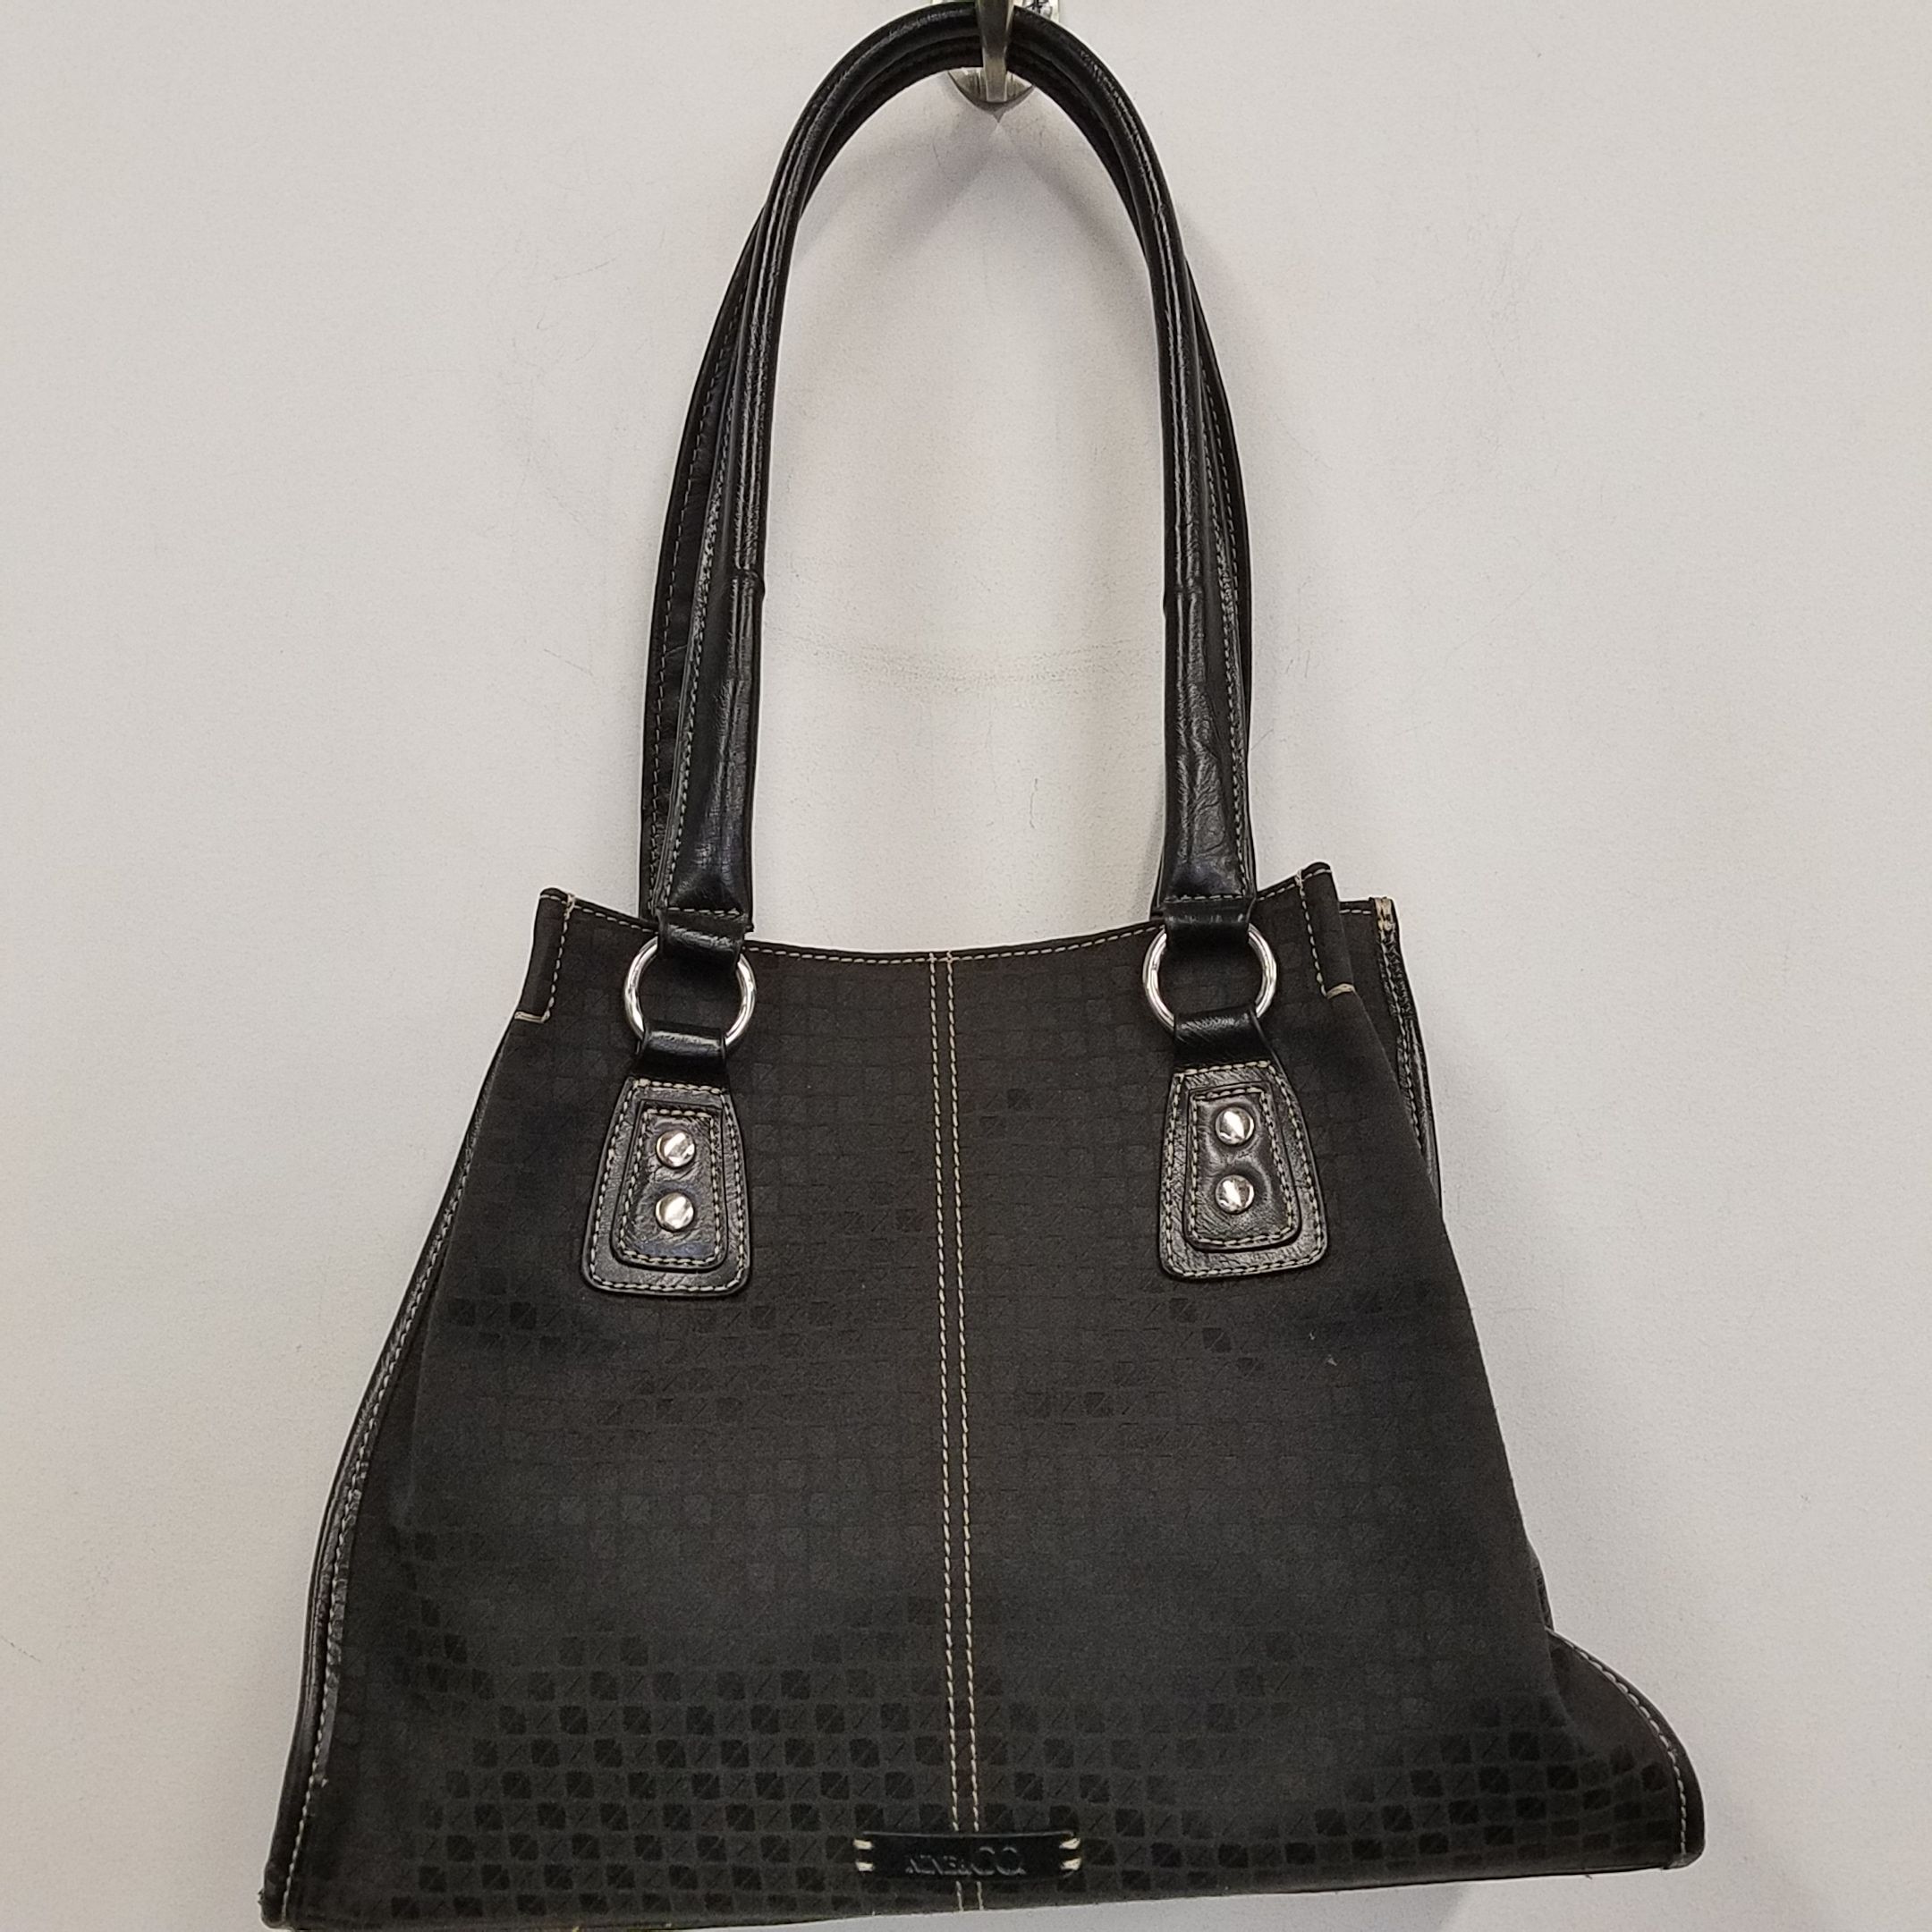 Buy NINE WEST Women Black Shoulder Bag BLACK Online @ Best Price in India |  Flipkart.com